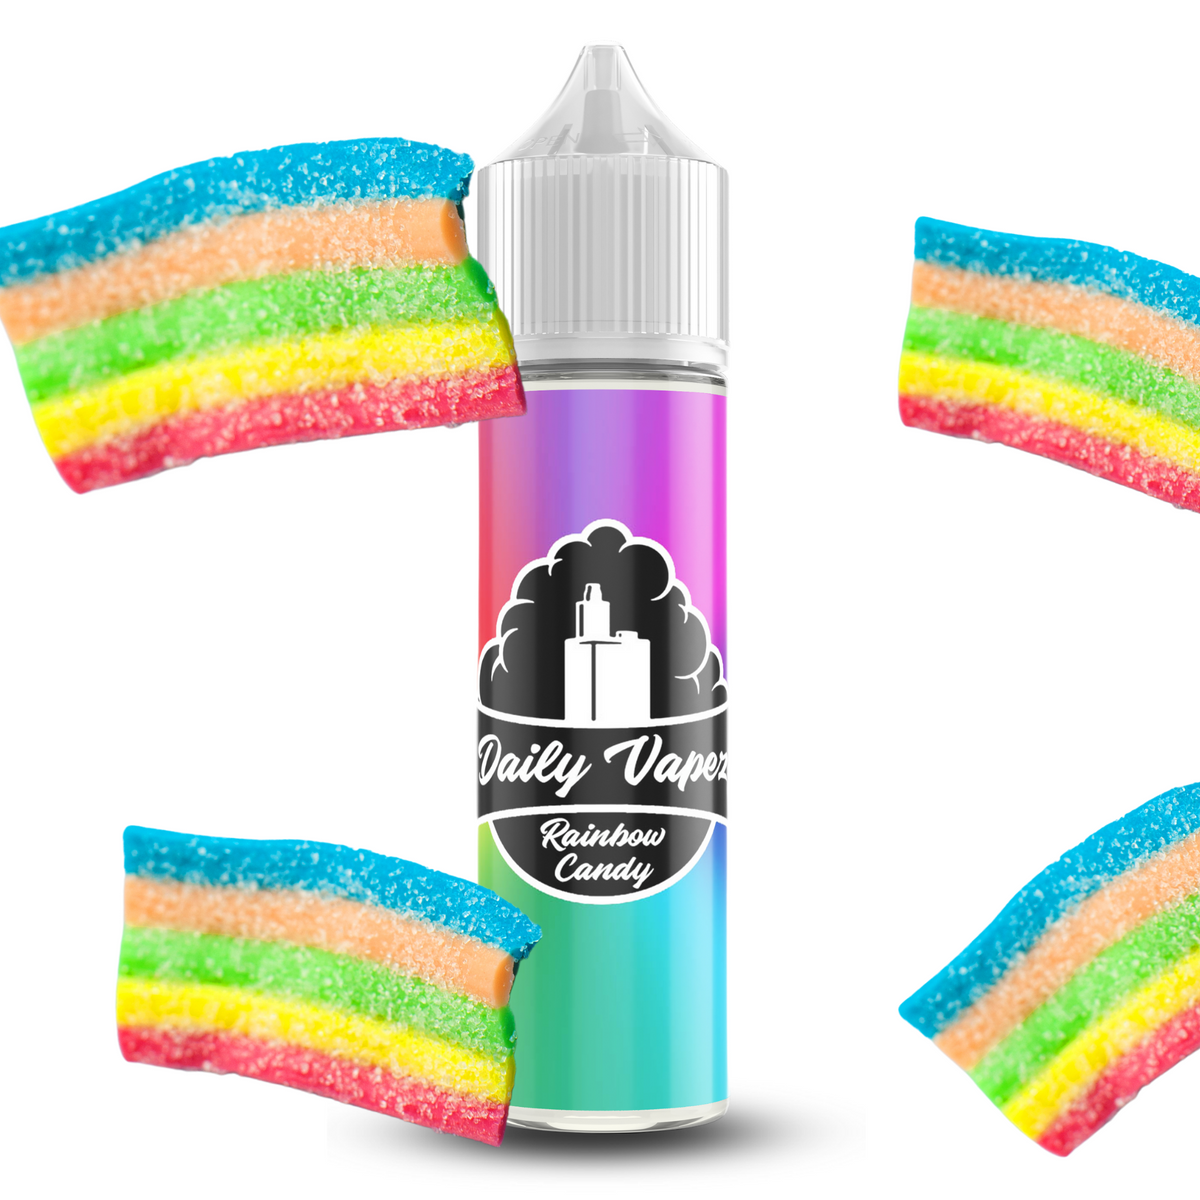 Daily Vapez - Rainbow Candy 50ml